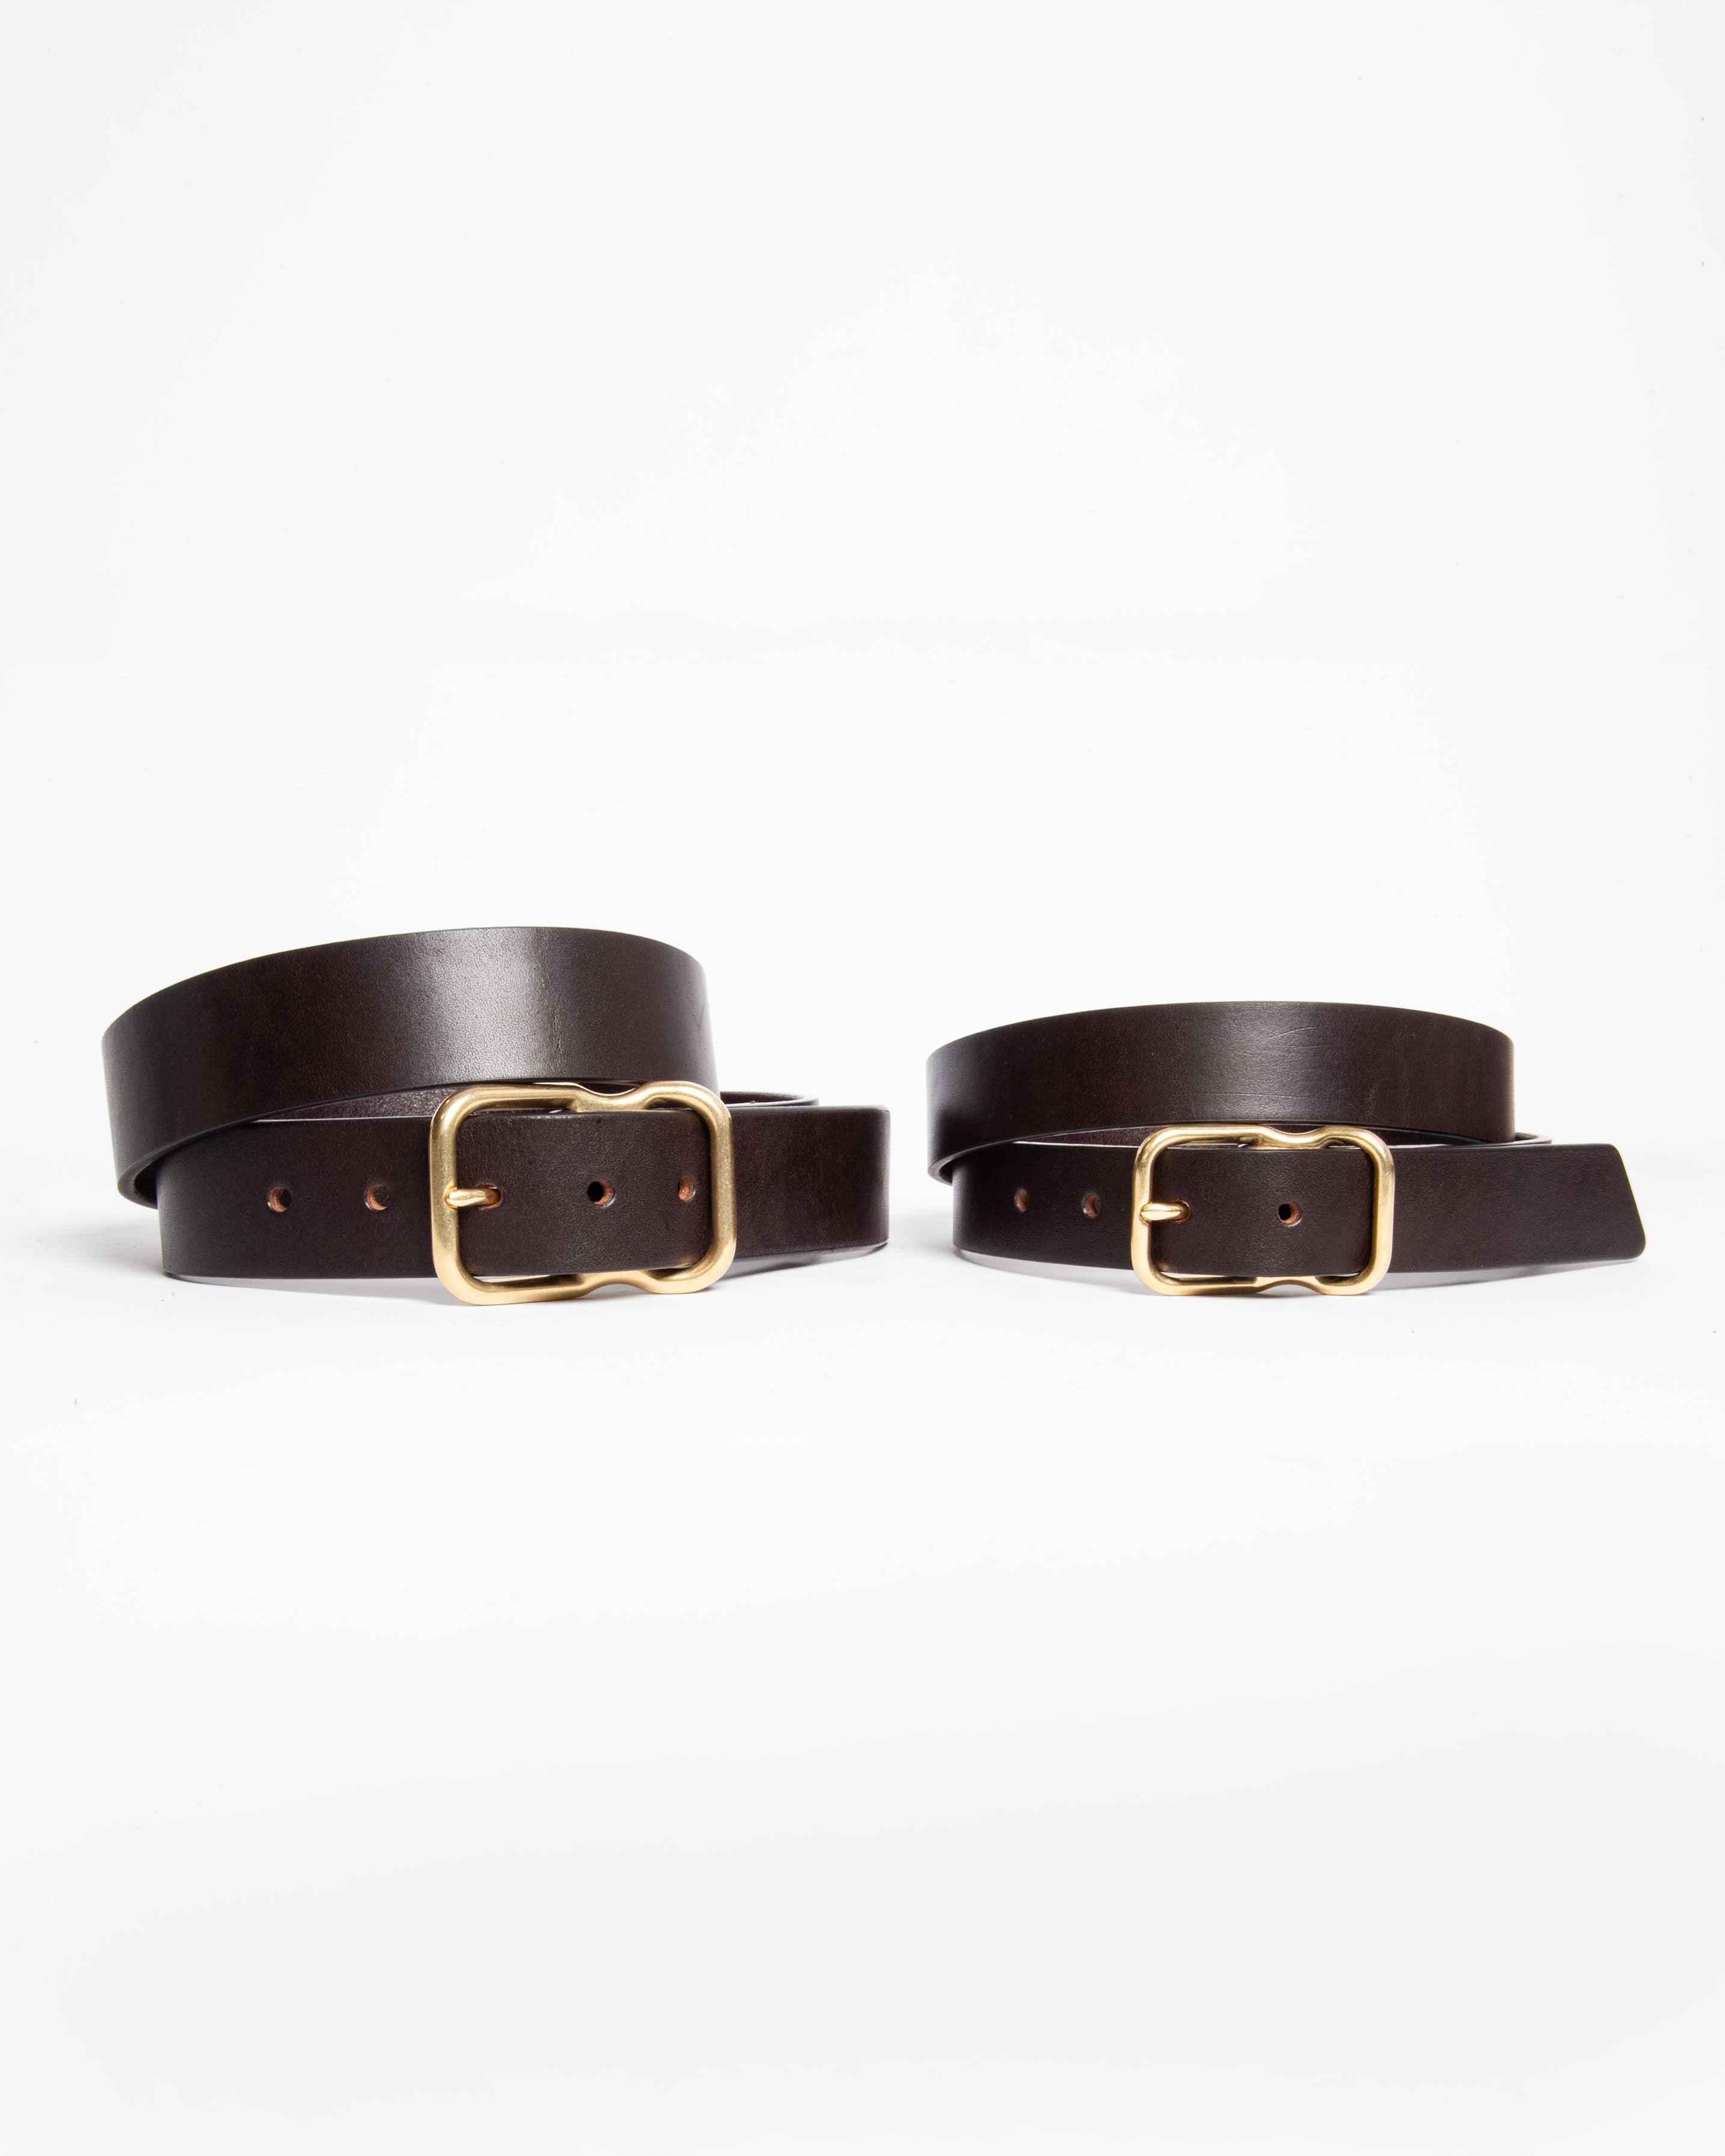 118 Signature Leather Belt - Narrow - Dark Brown - Brass